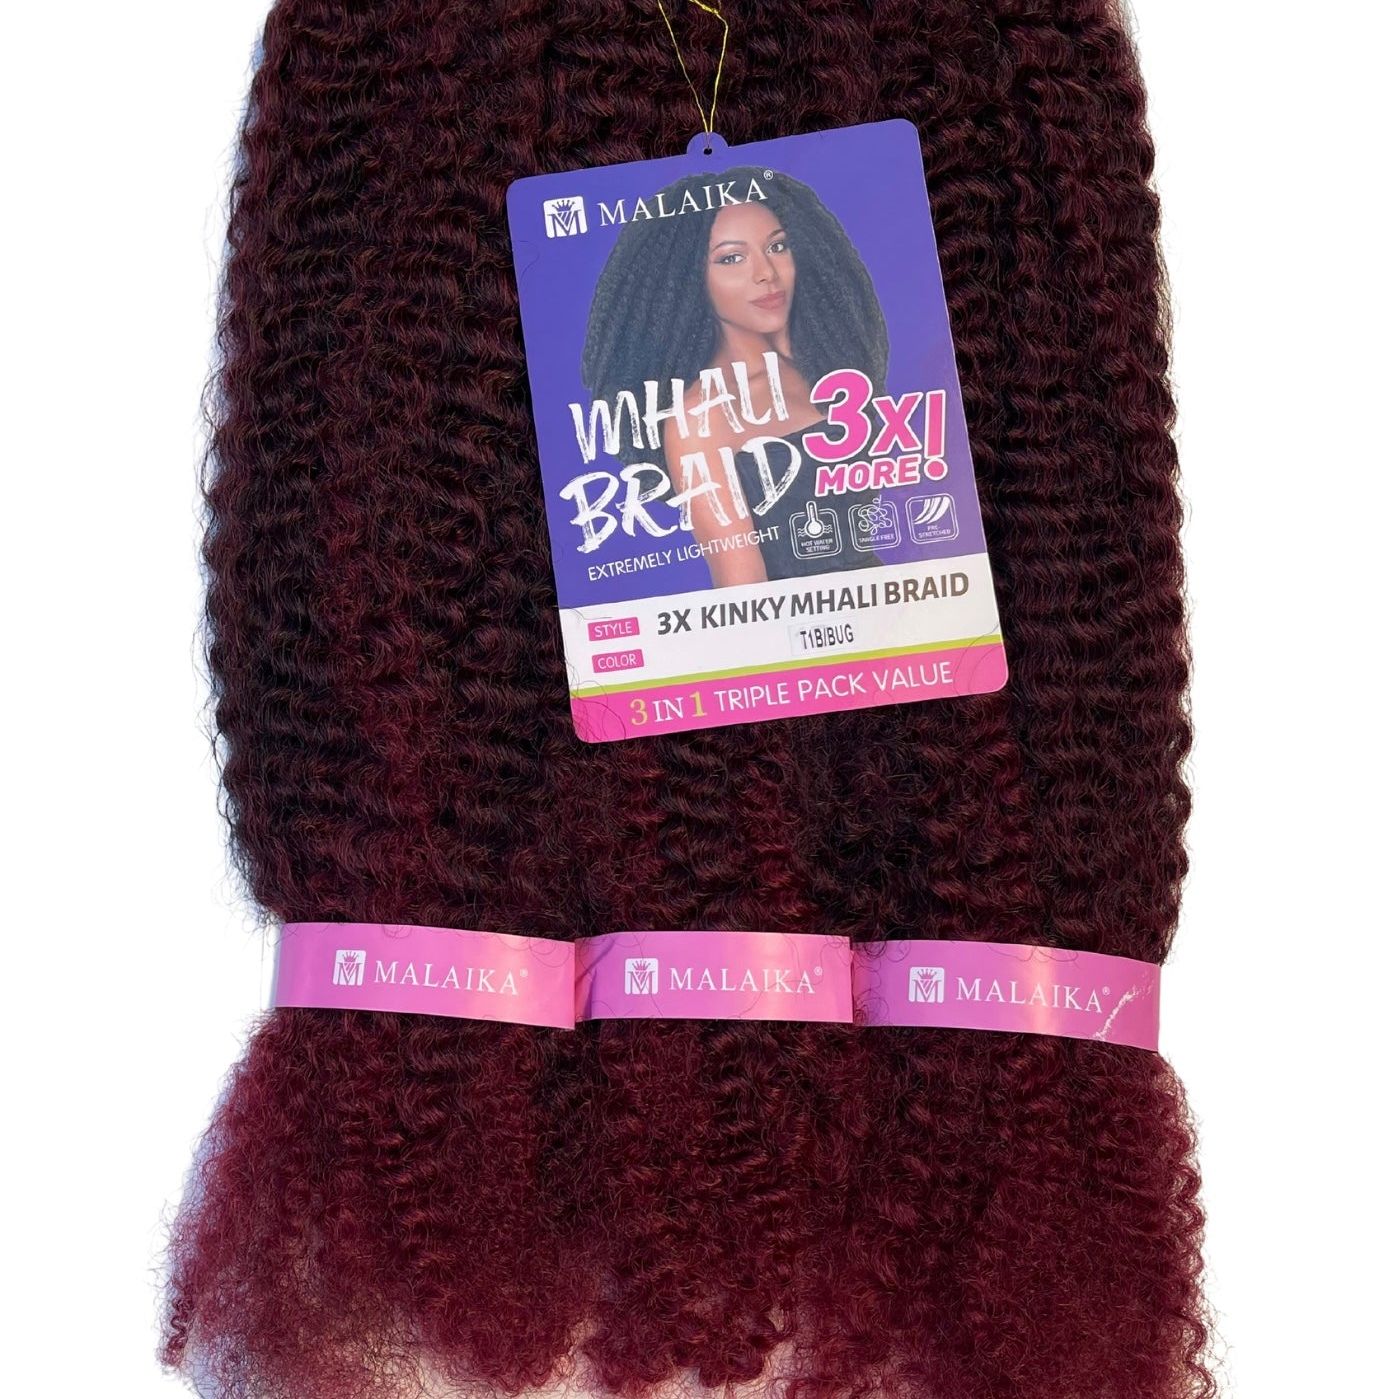 Kinky Mahli Braiding Hair 3 in 1 packet